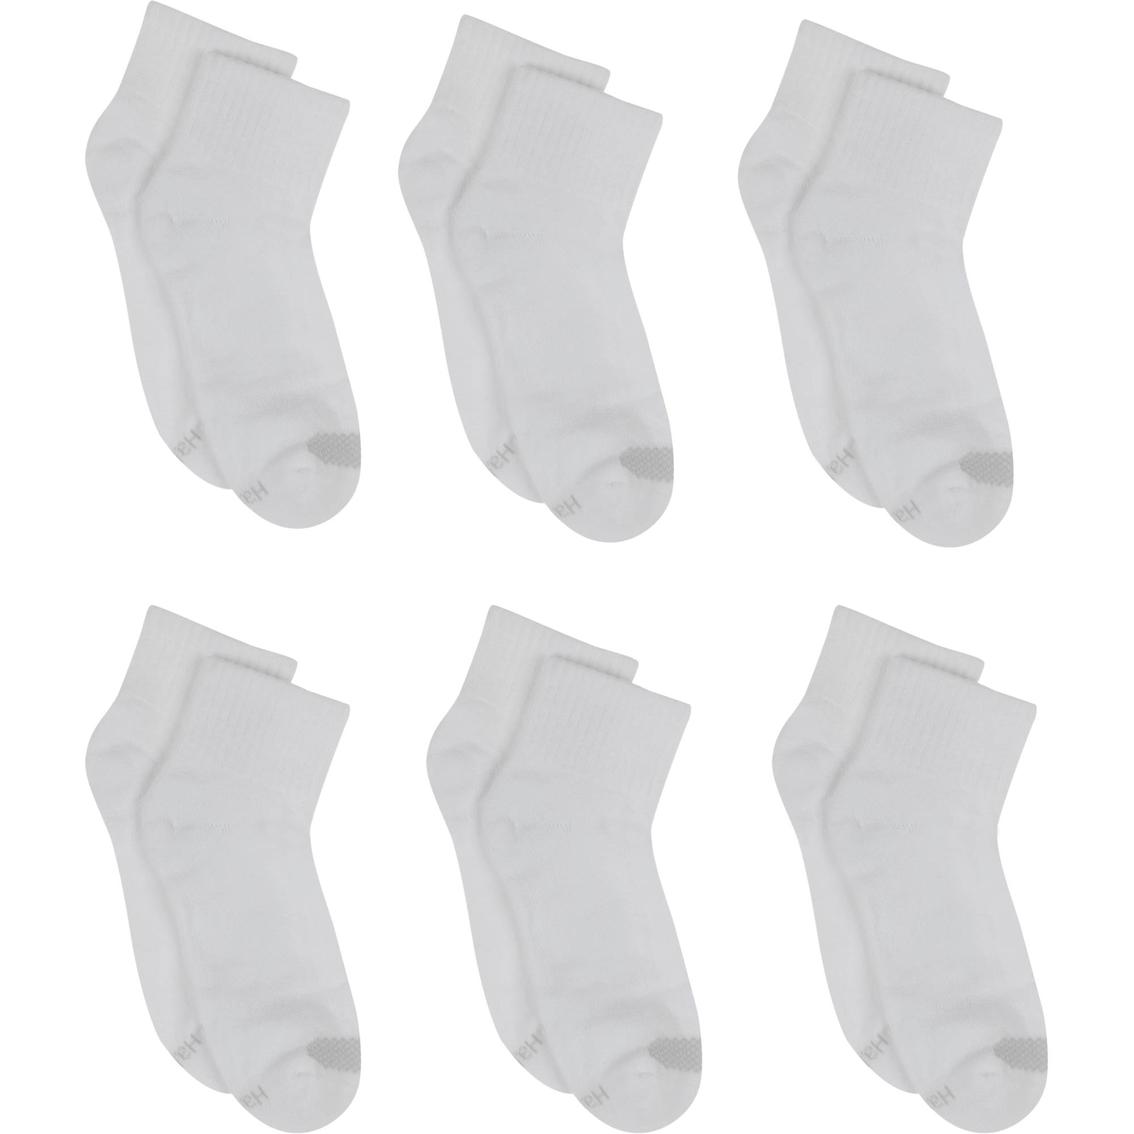 Hanes Red Label Women's Ankle Socks, 6 Pk. - Image 2 of 2